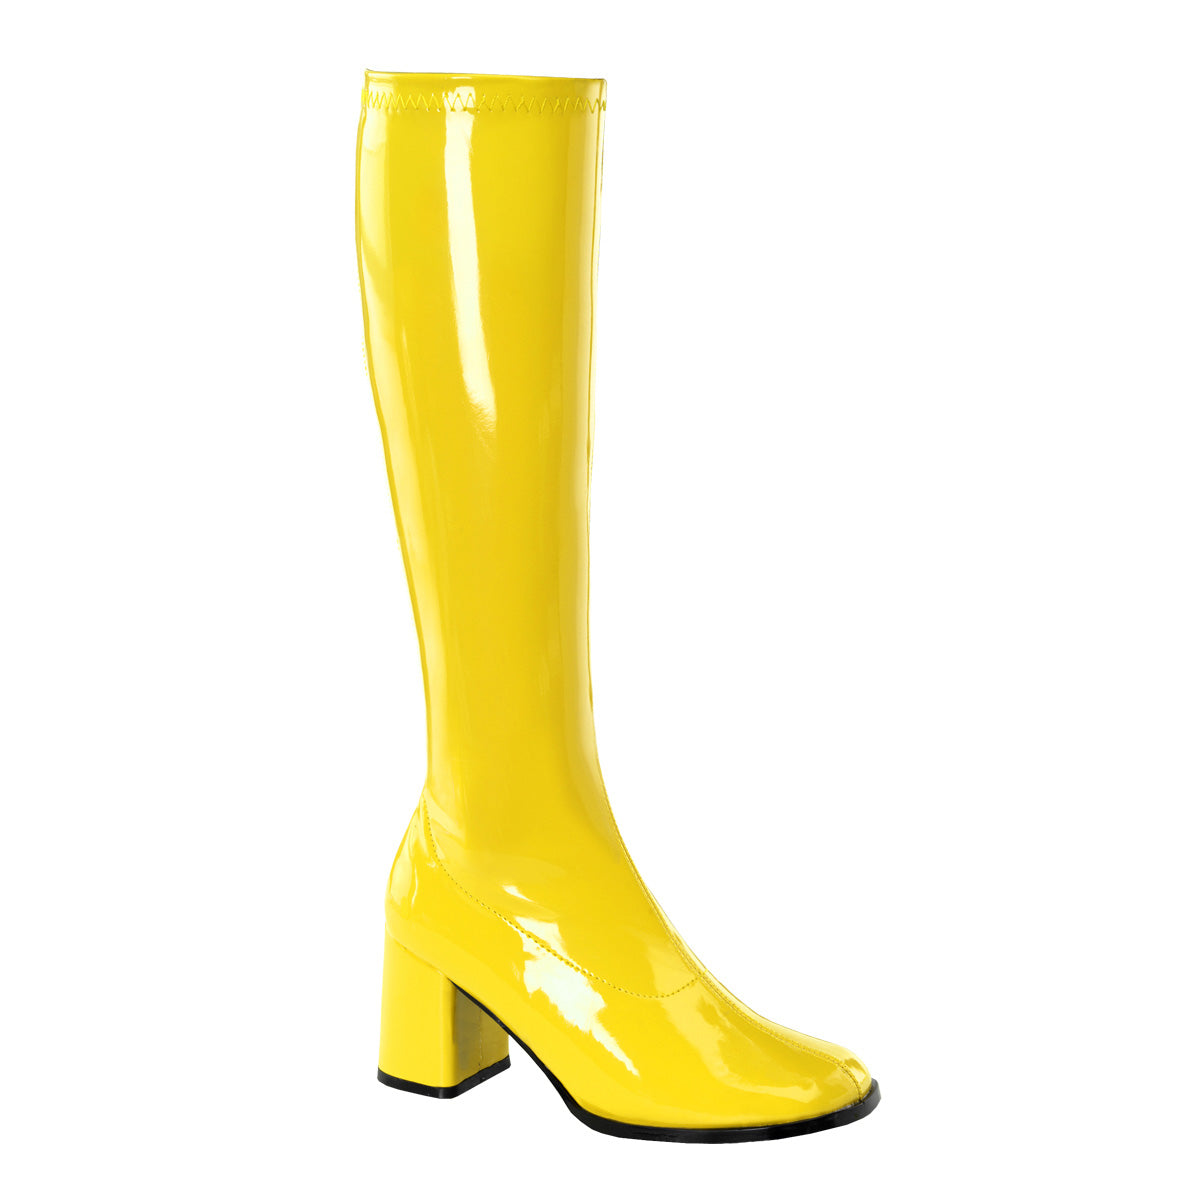 GOGO-300 Pleasers Funtasma 3 Inch Heel Yellow Women's Boots